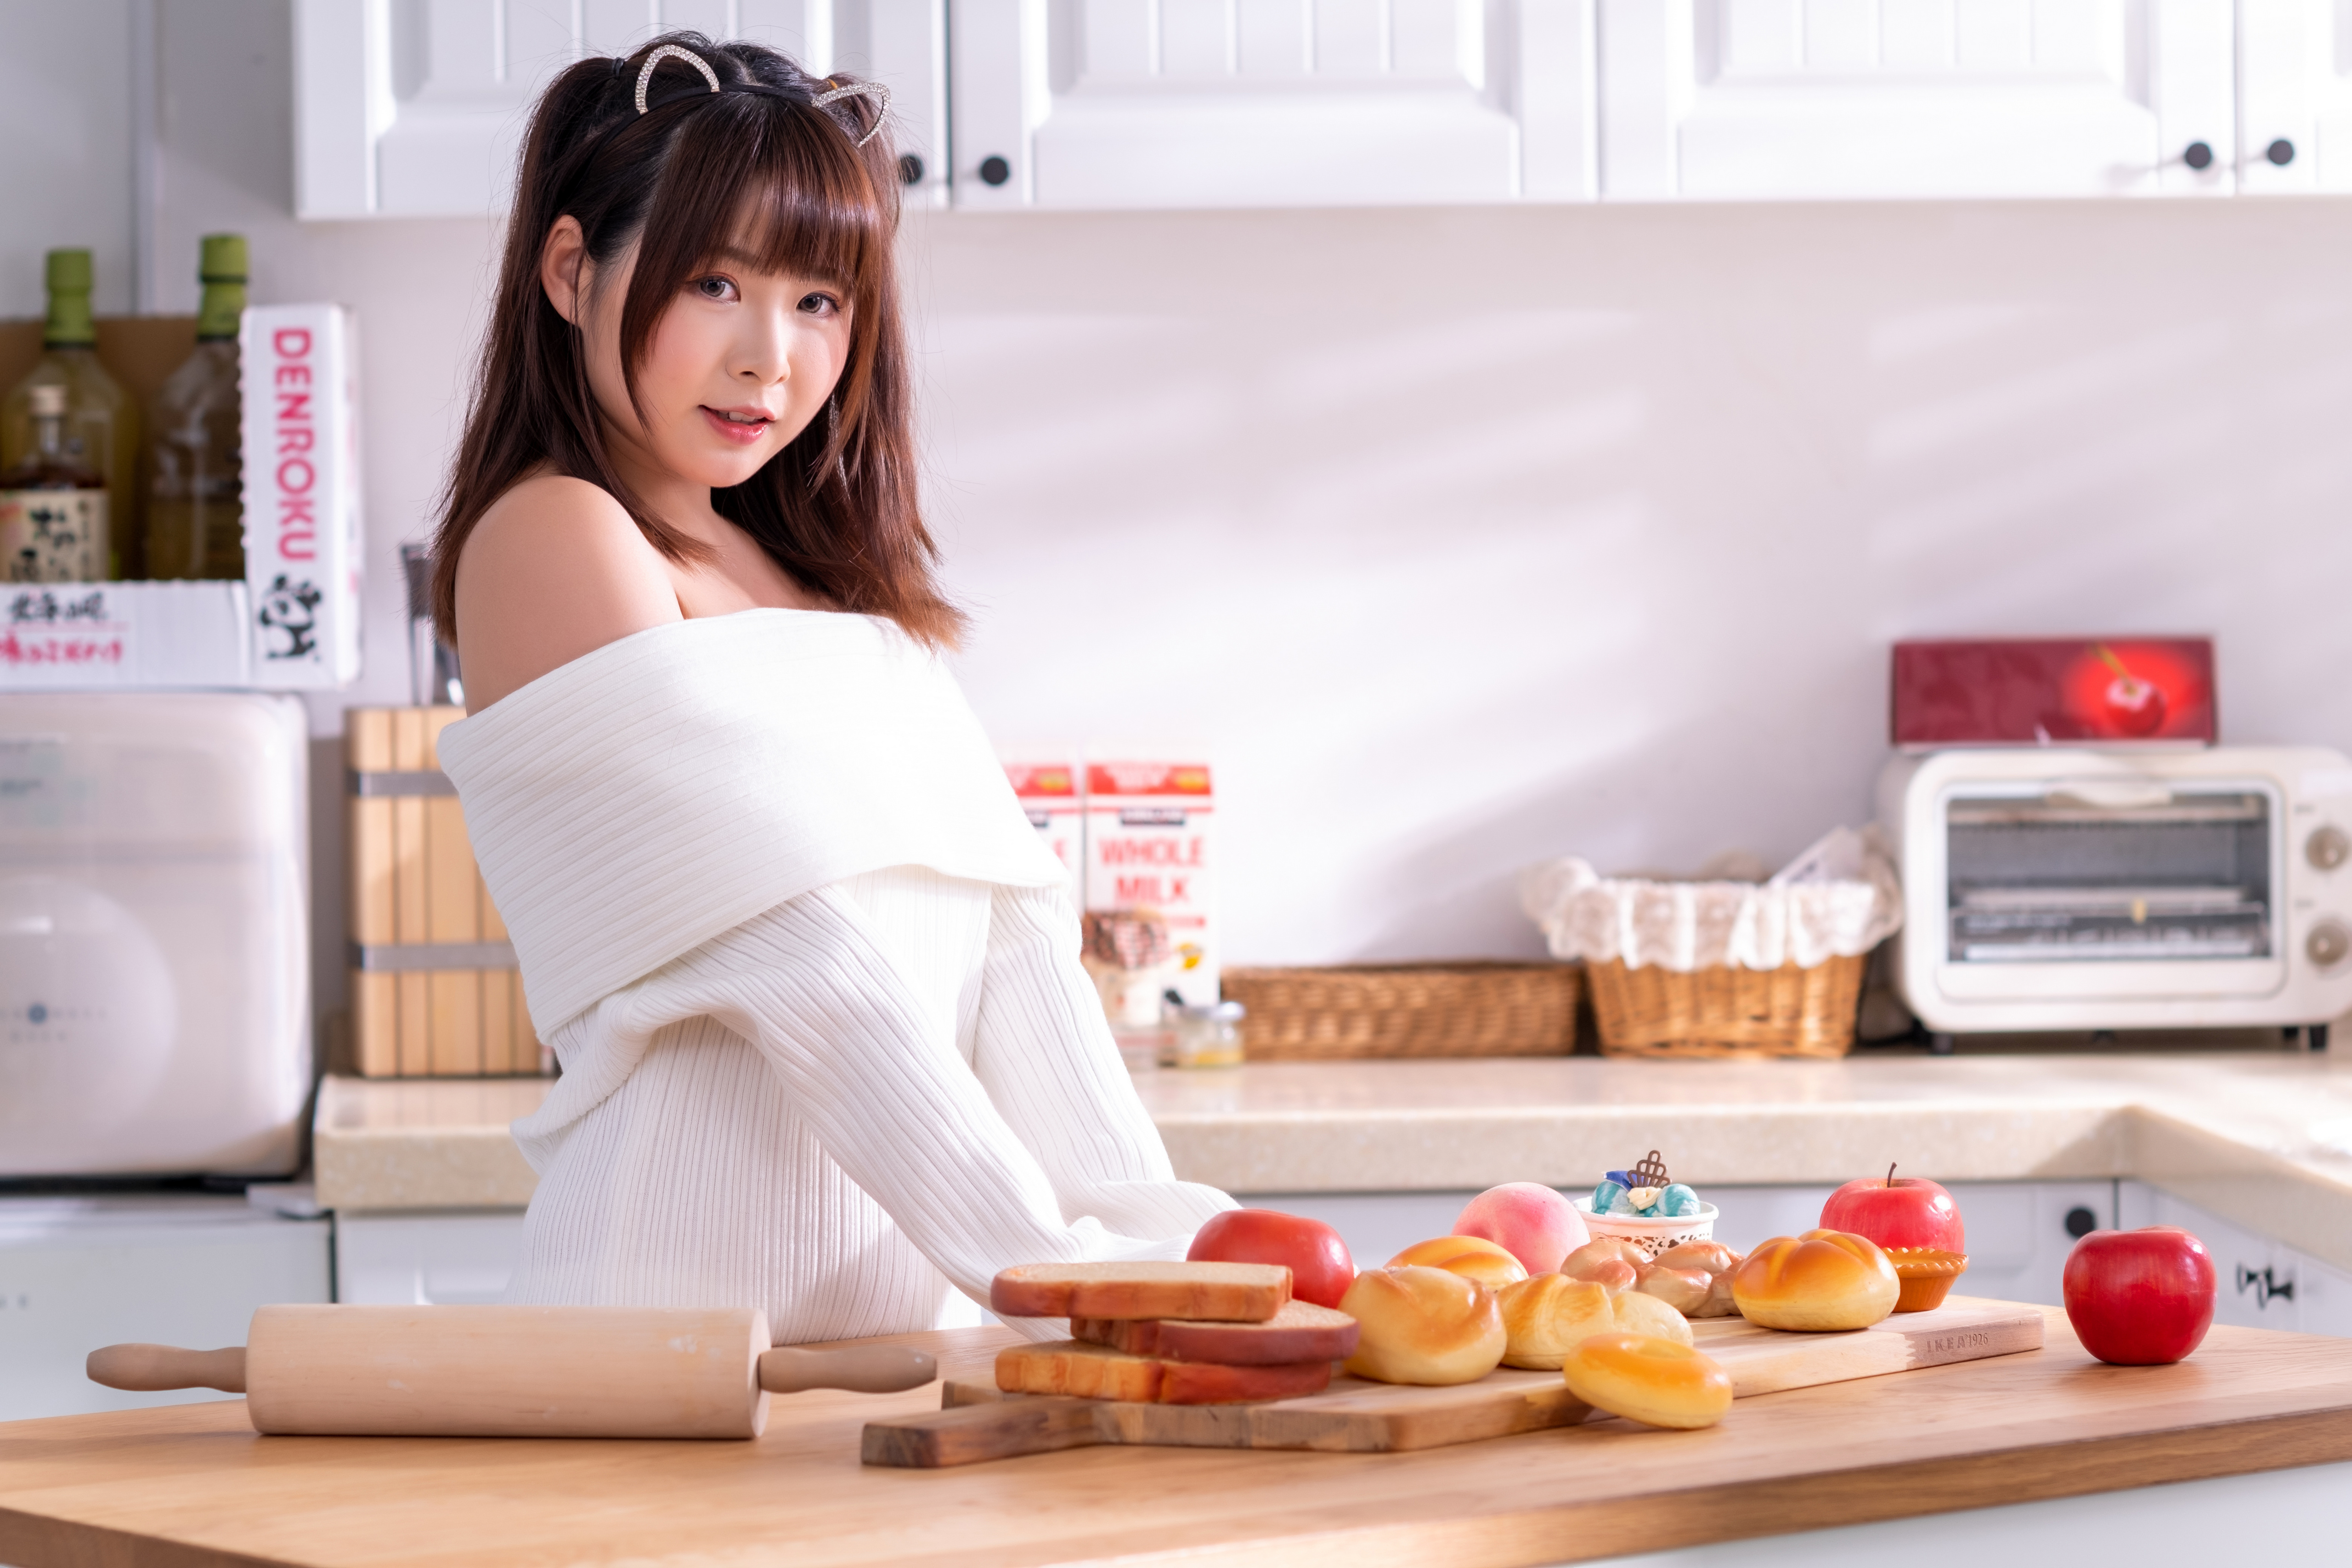 Asian Model Women Long Hair Dark Hair Kitchen Bread Apples Food 5120x3413